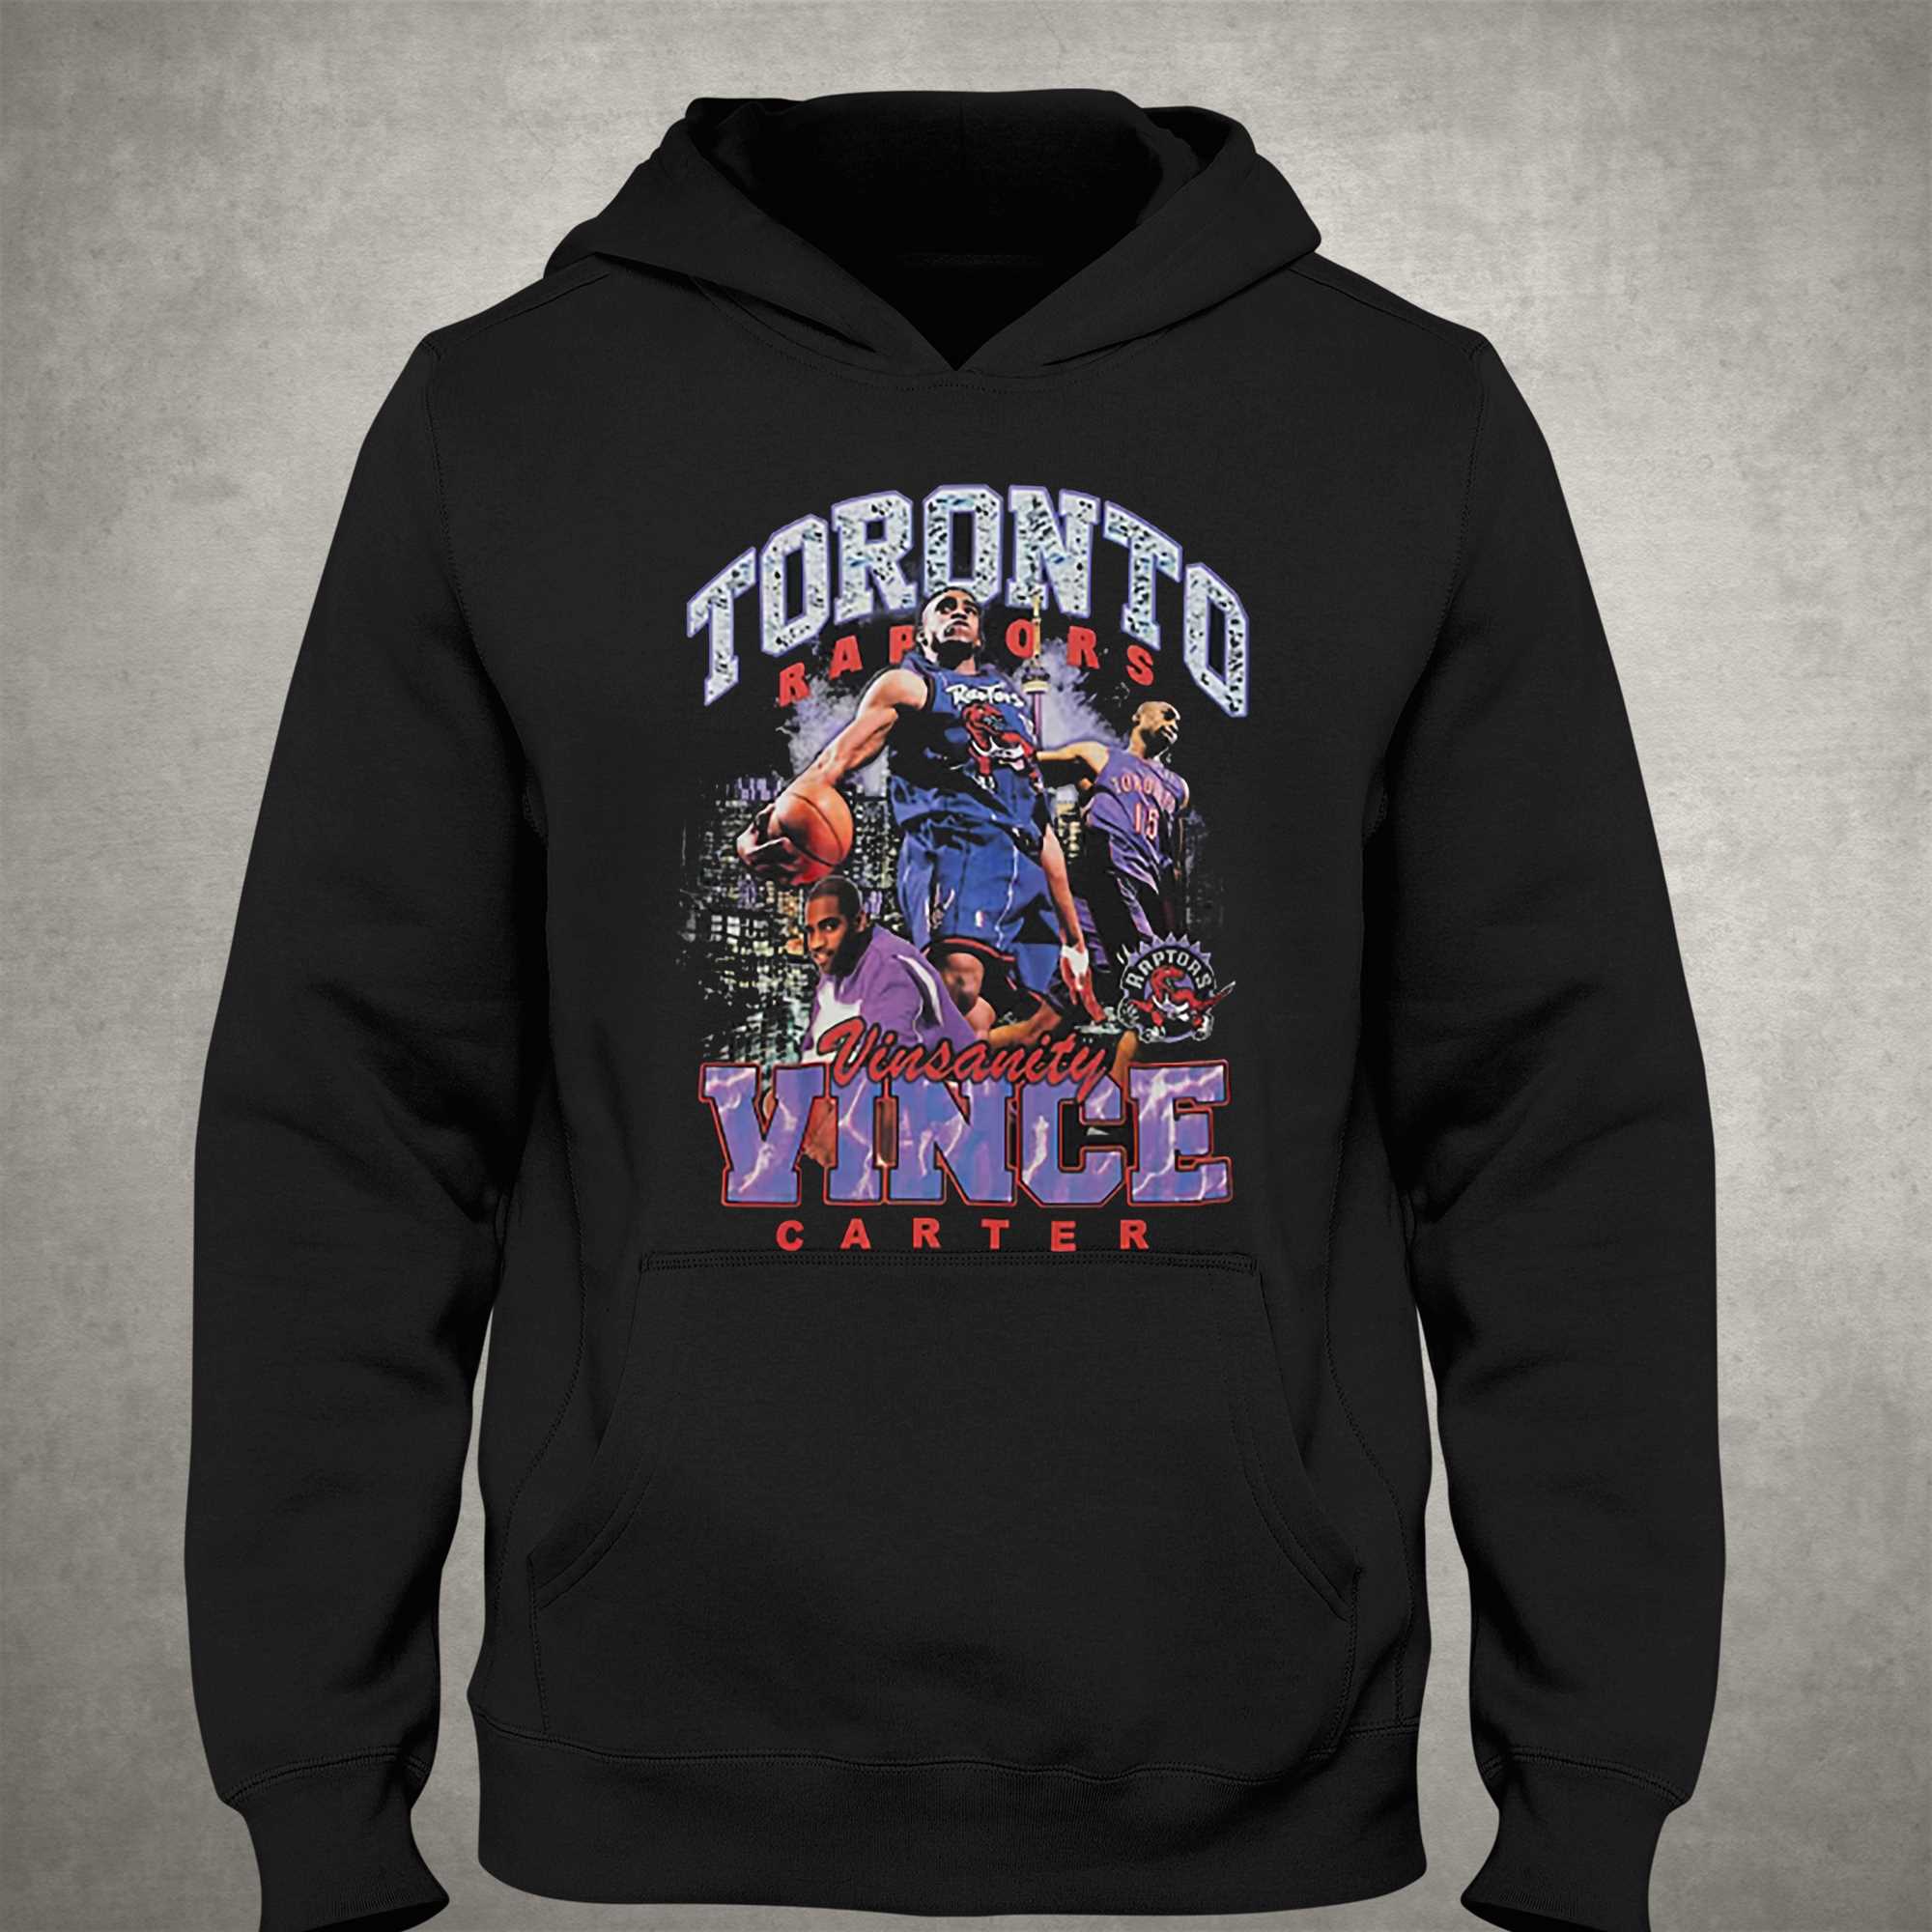 Vintage Toronto Raptors Shirt - Trends Bedding